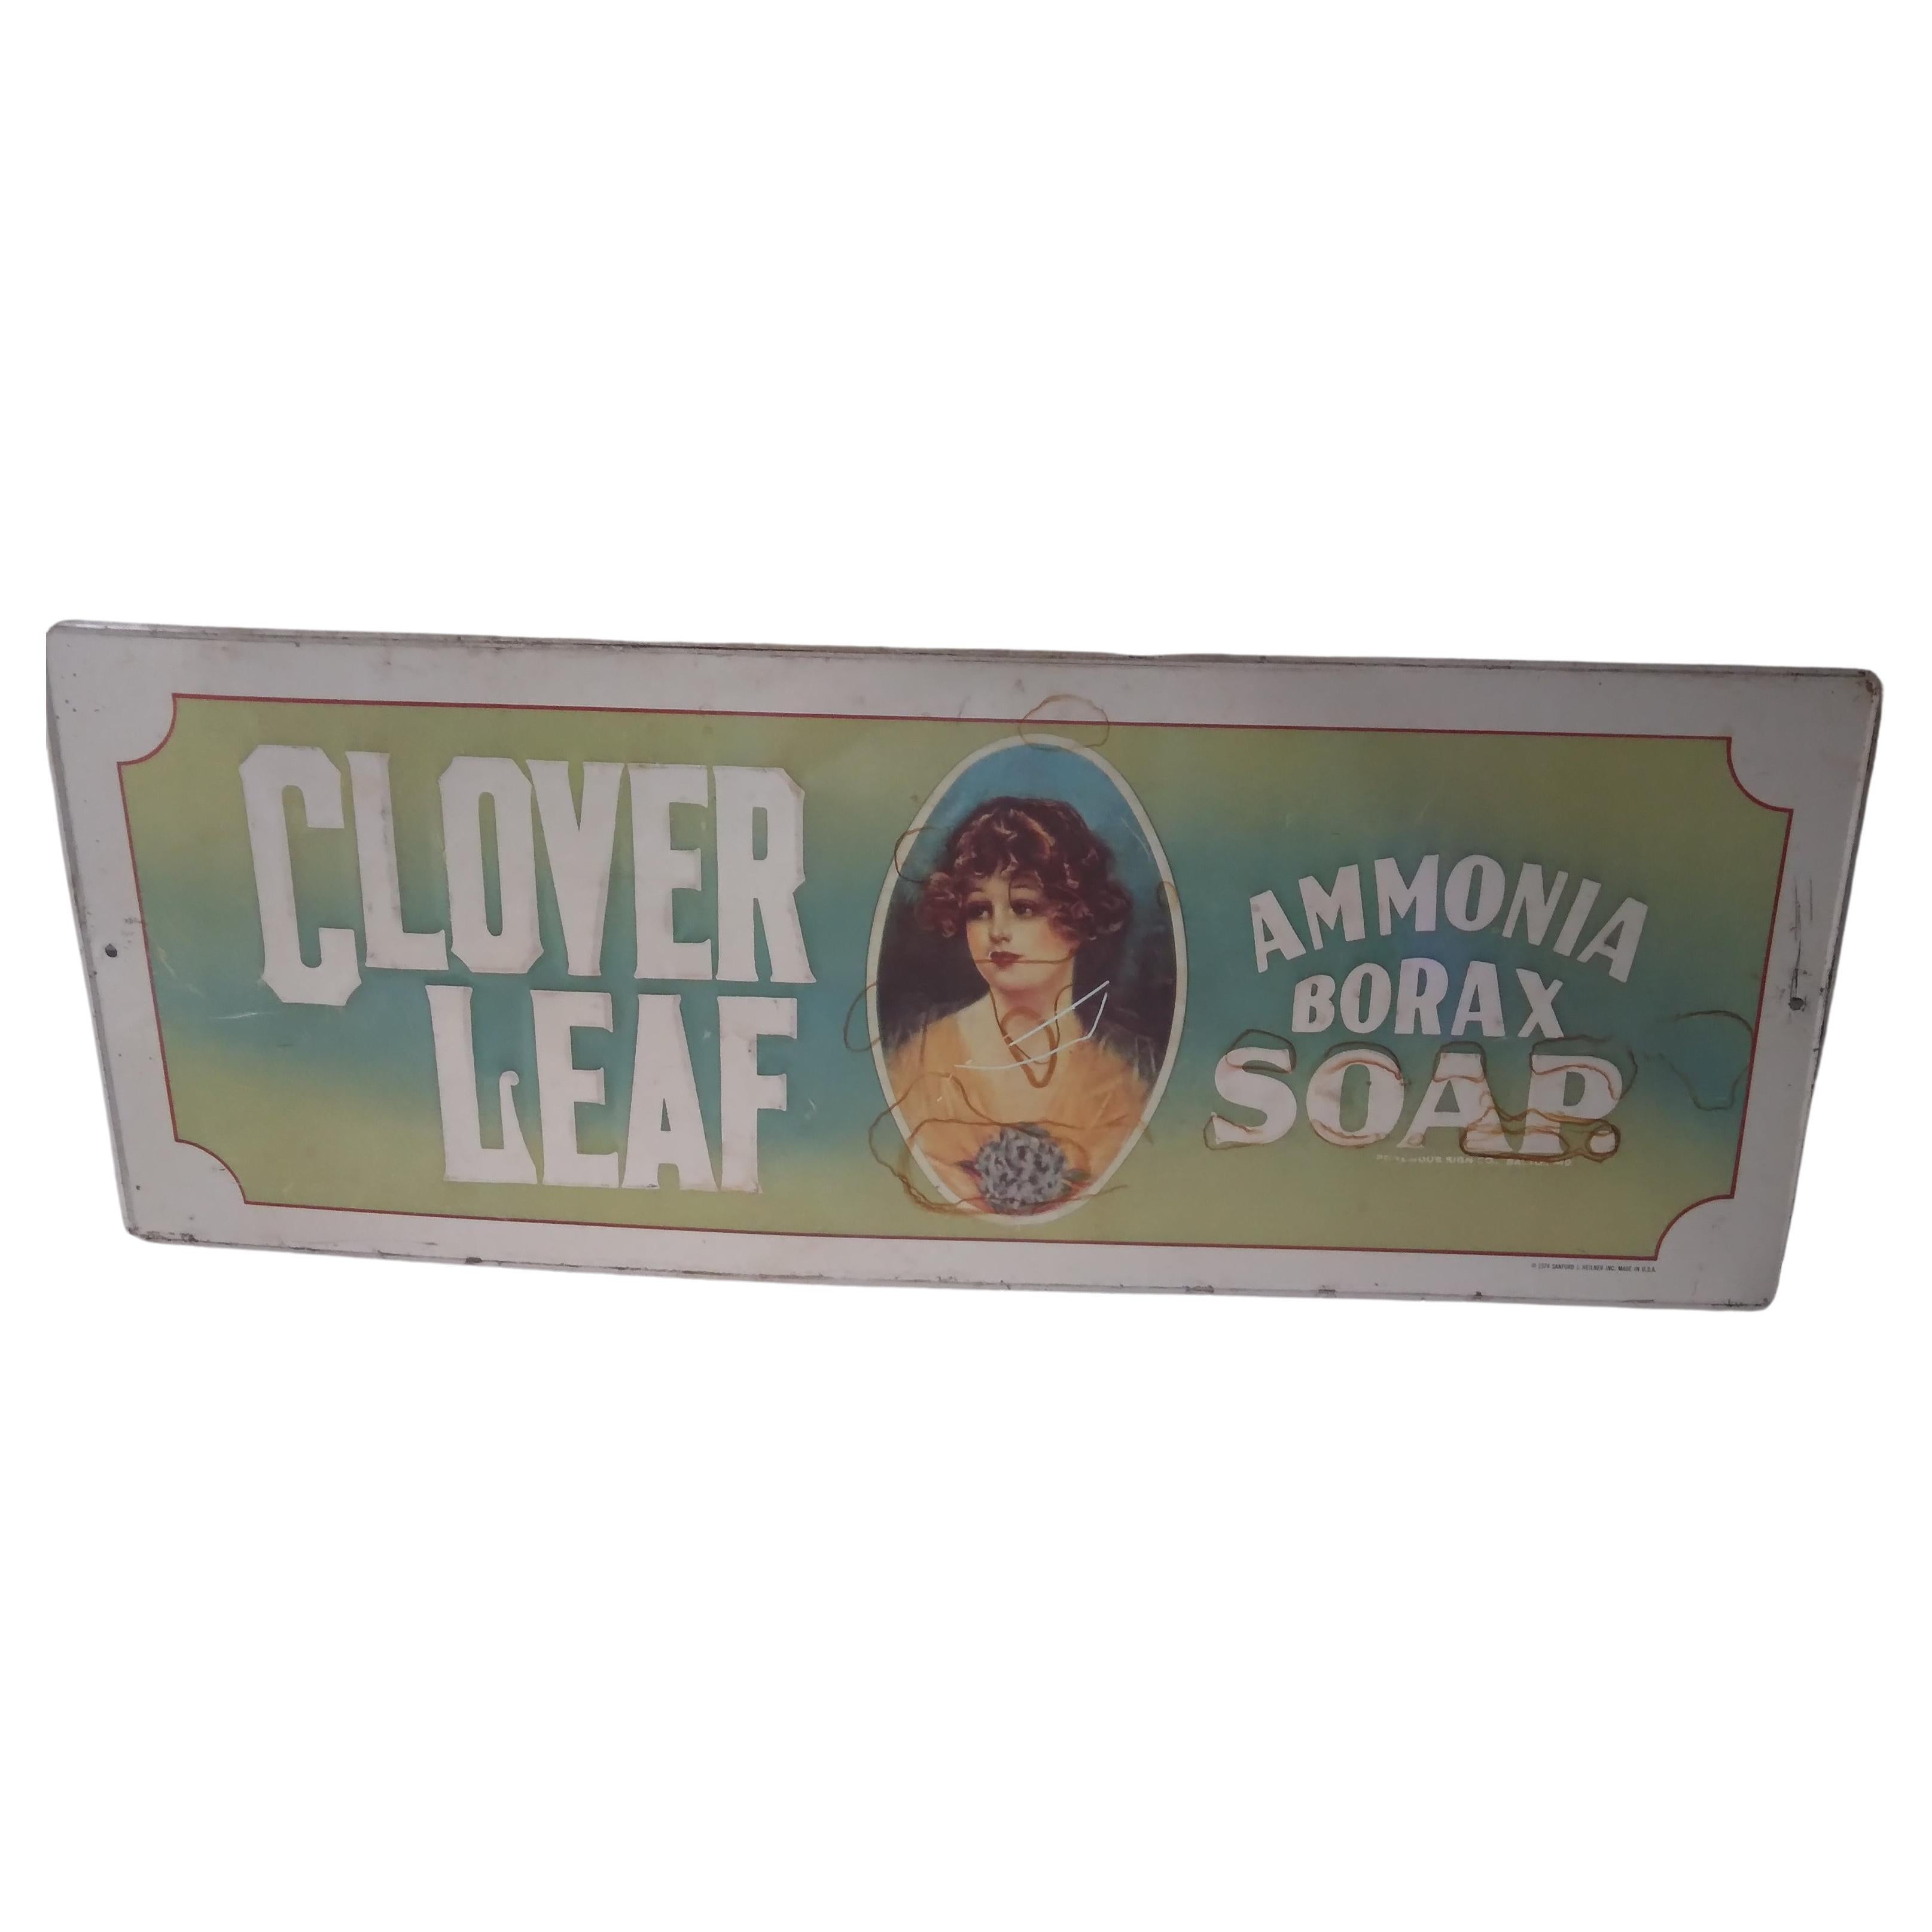 Vintage Metal Sign Clover Leaf Ammonia Borax Soap - 1974 For Sale